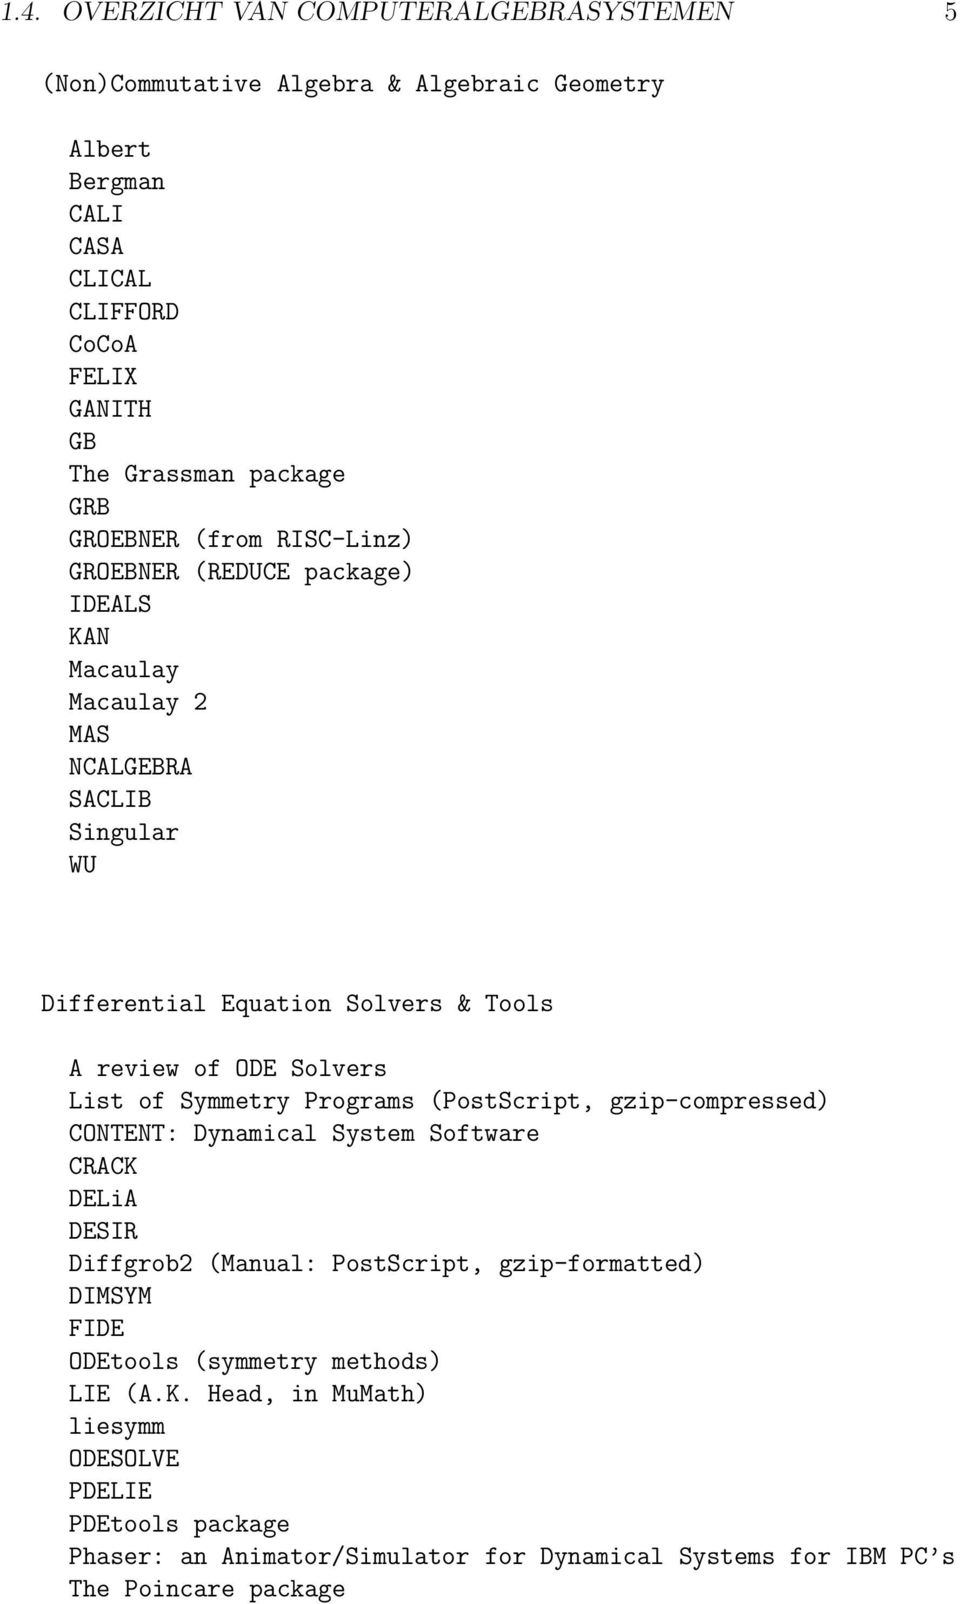 Solvers List of Symmetry Programs (PostScript, gzip-compressed) CONTENT: Dynamical System Software CRACK DELiA DESIR Diffgrob2 (Manual: PostScript, gzip-formatted) DIMSYM FIDE